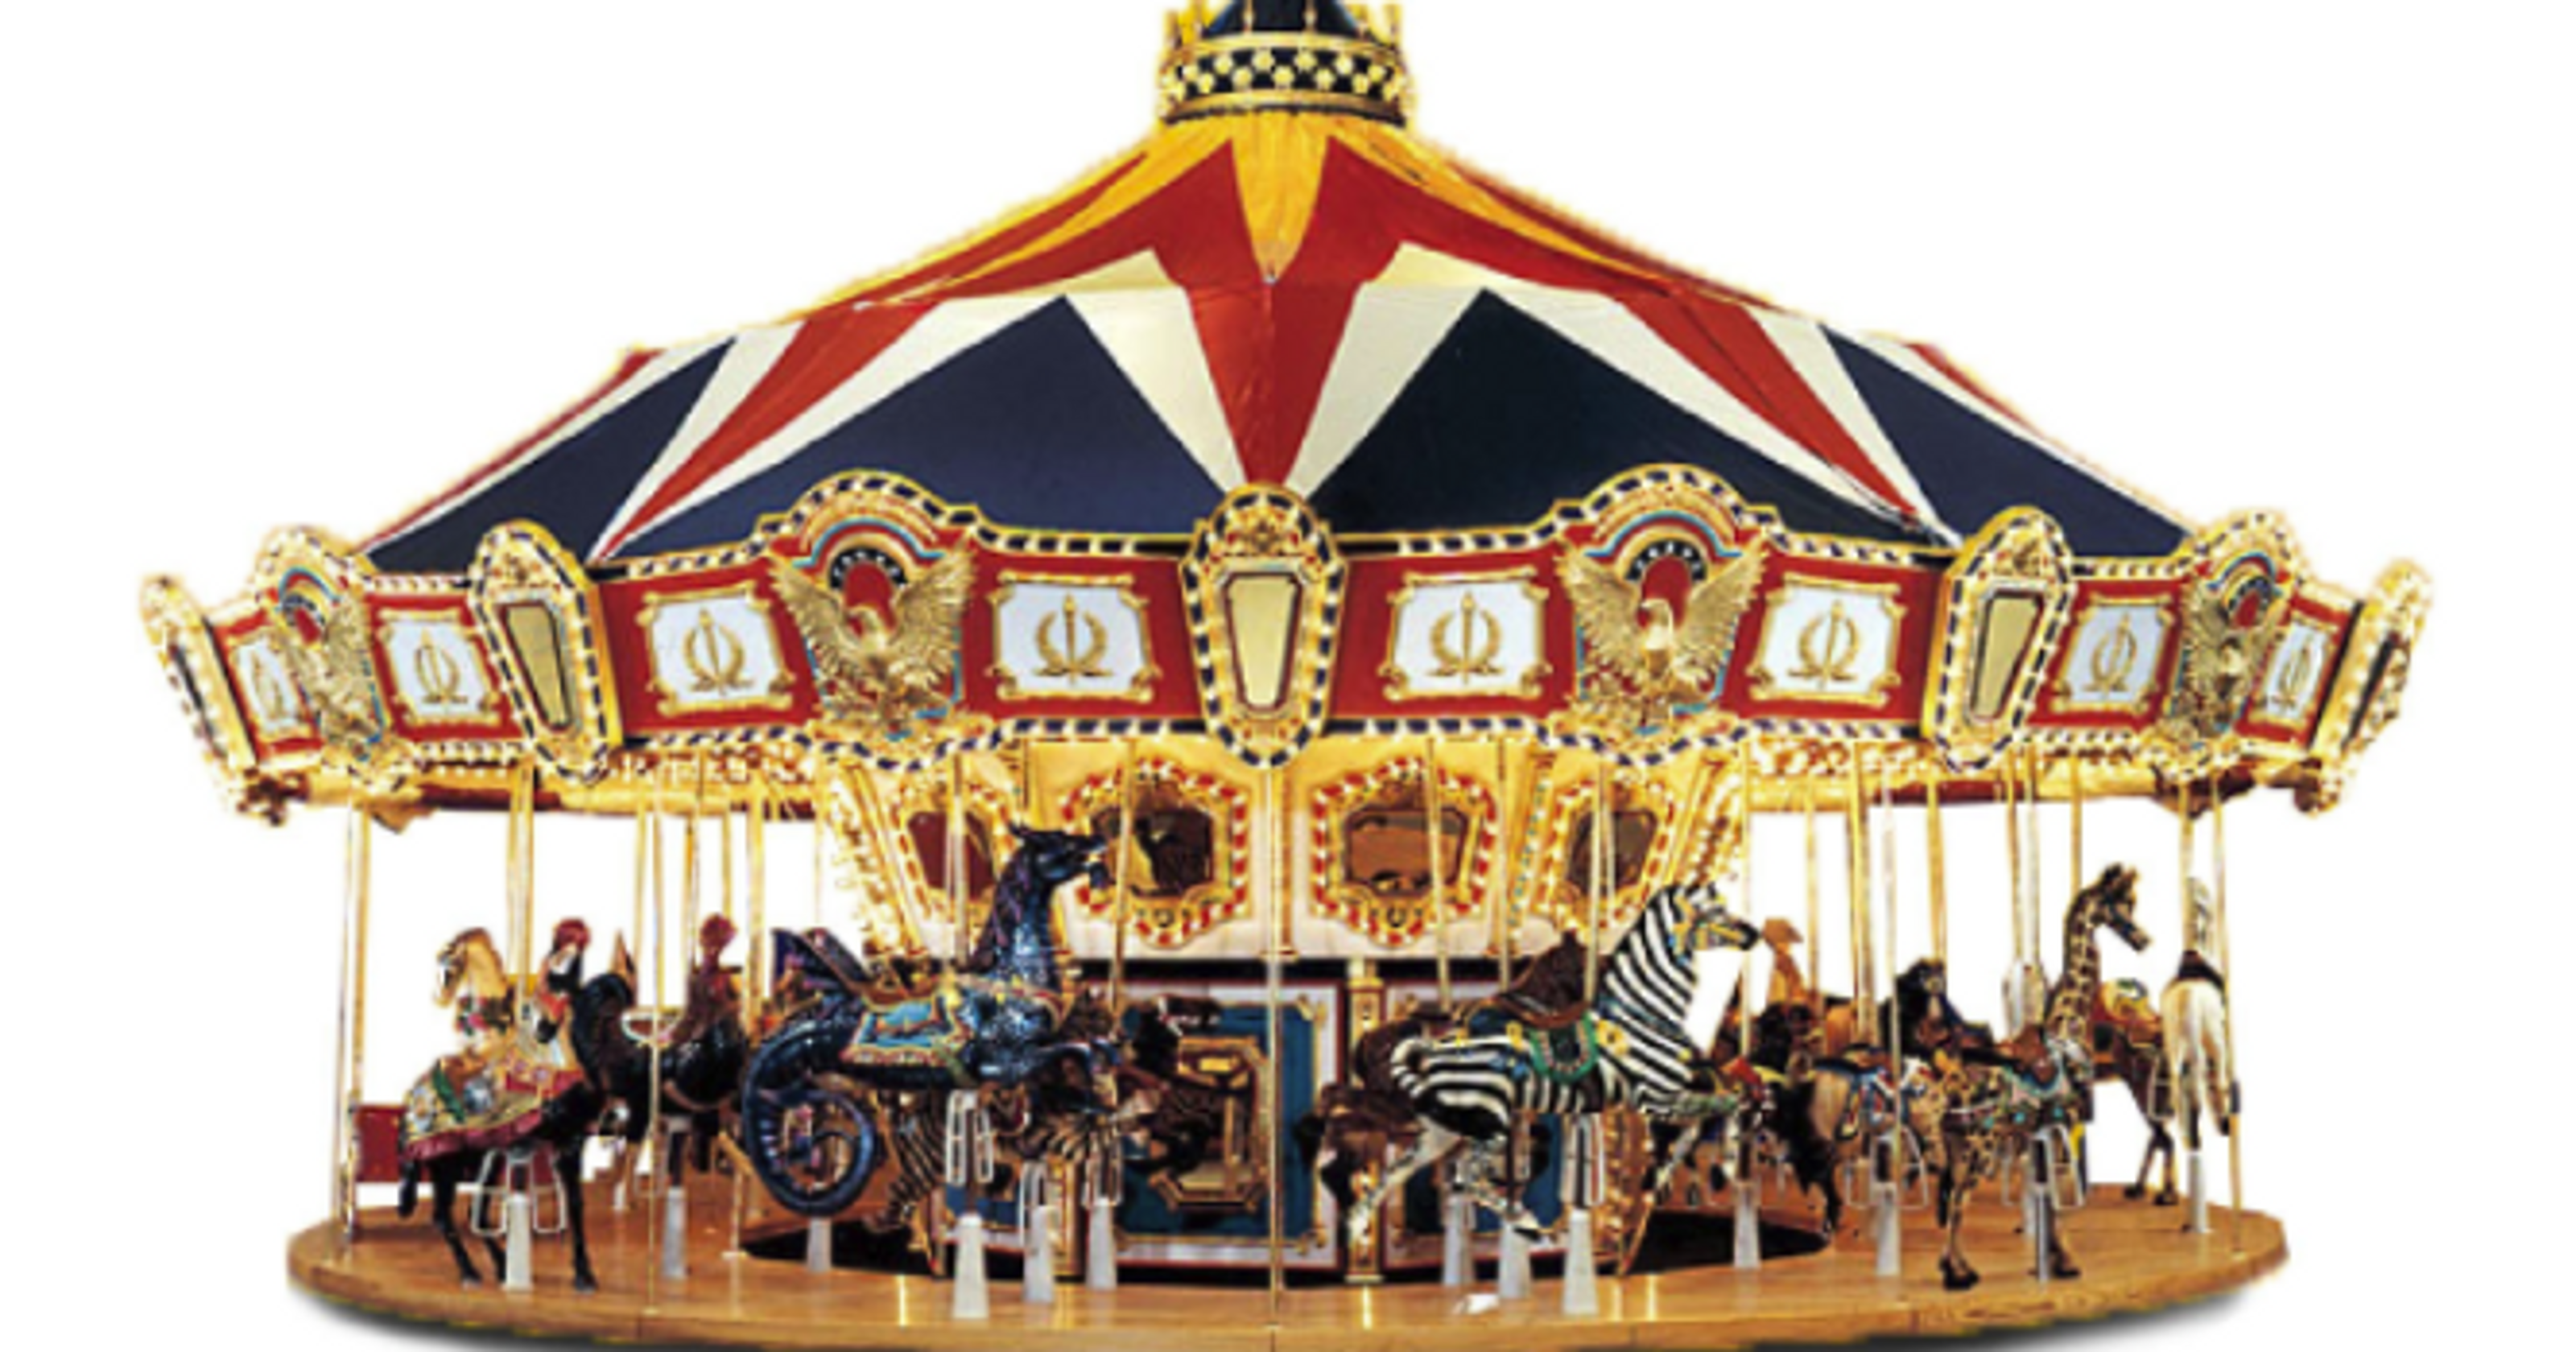 Arnolds Park debuting 'show stopper' giant carousel this summer.